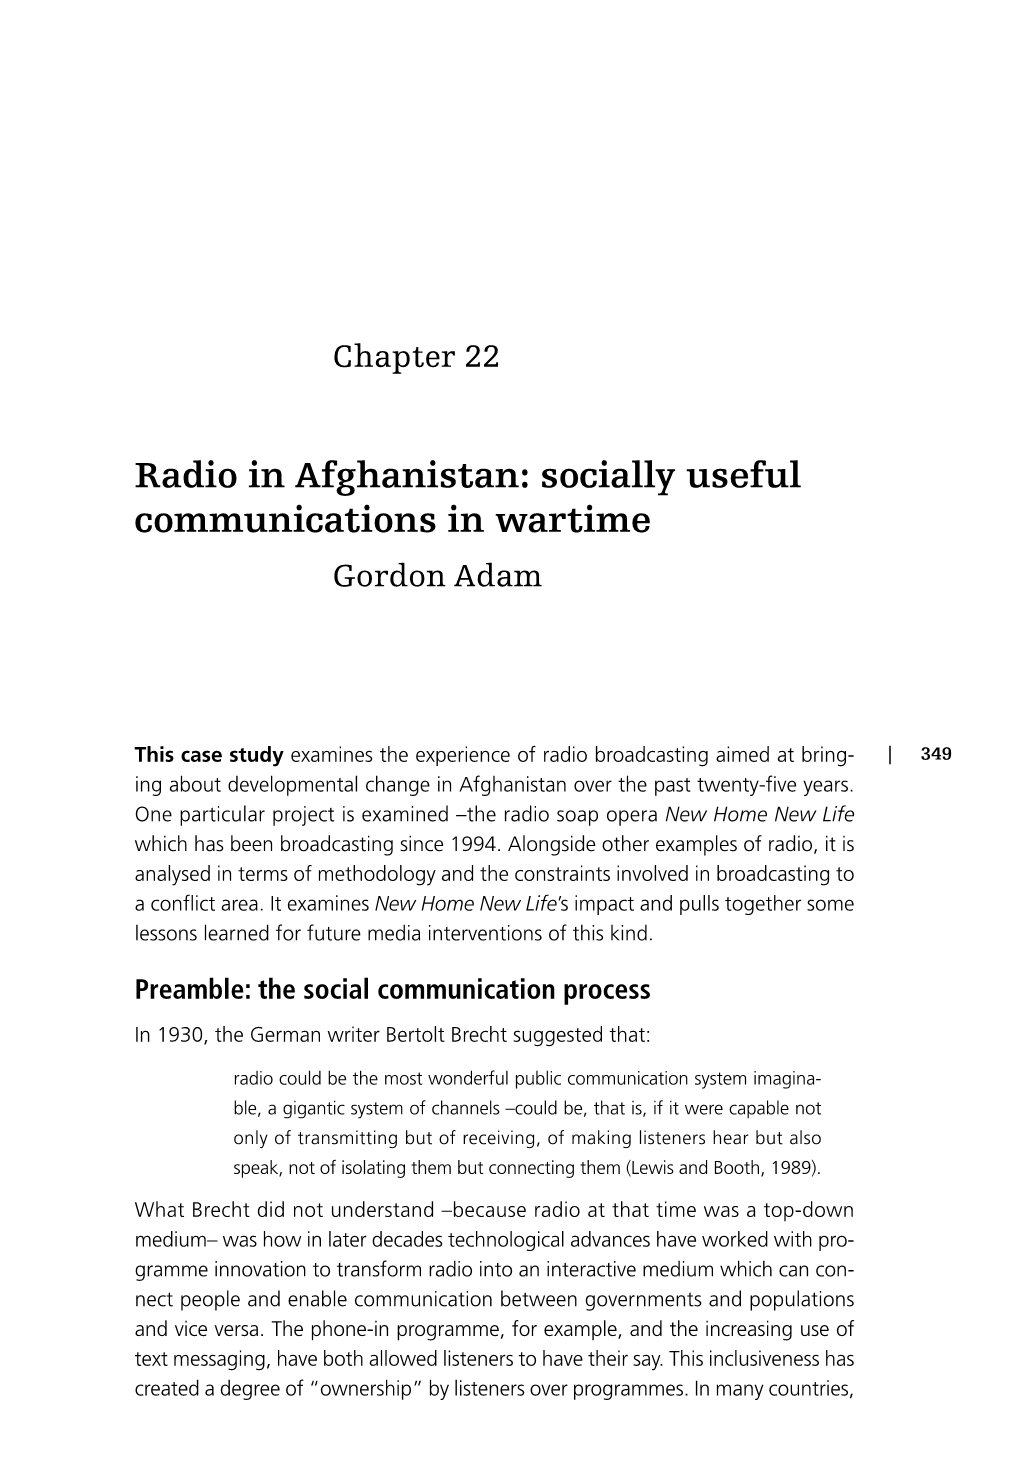 Radio in Afghanistan: Socially Useful Communications in Wartime Gordon Adam